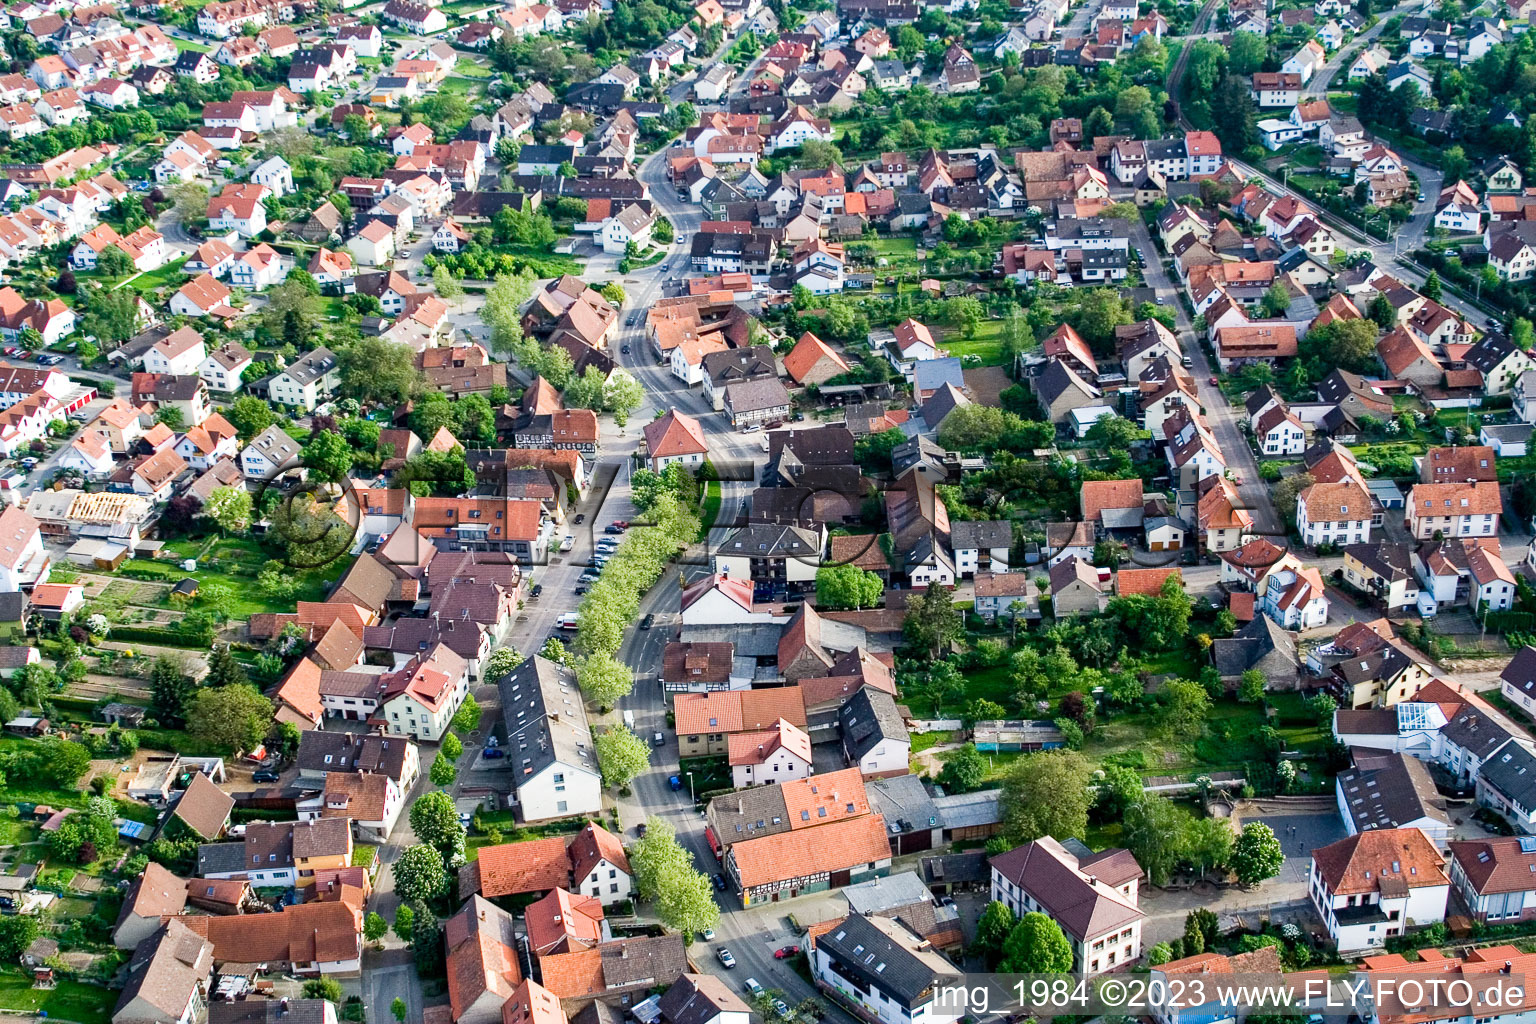 Vue aérienne de Quartier Langensteinbach in Karlsbad dans le département Bade-Wurtemberg, Allemagne